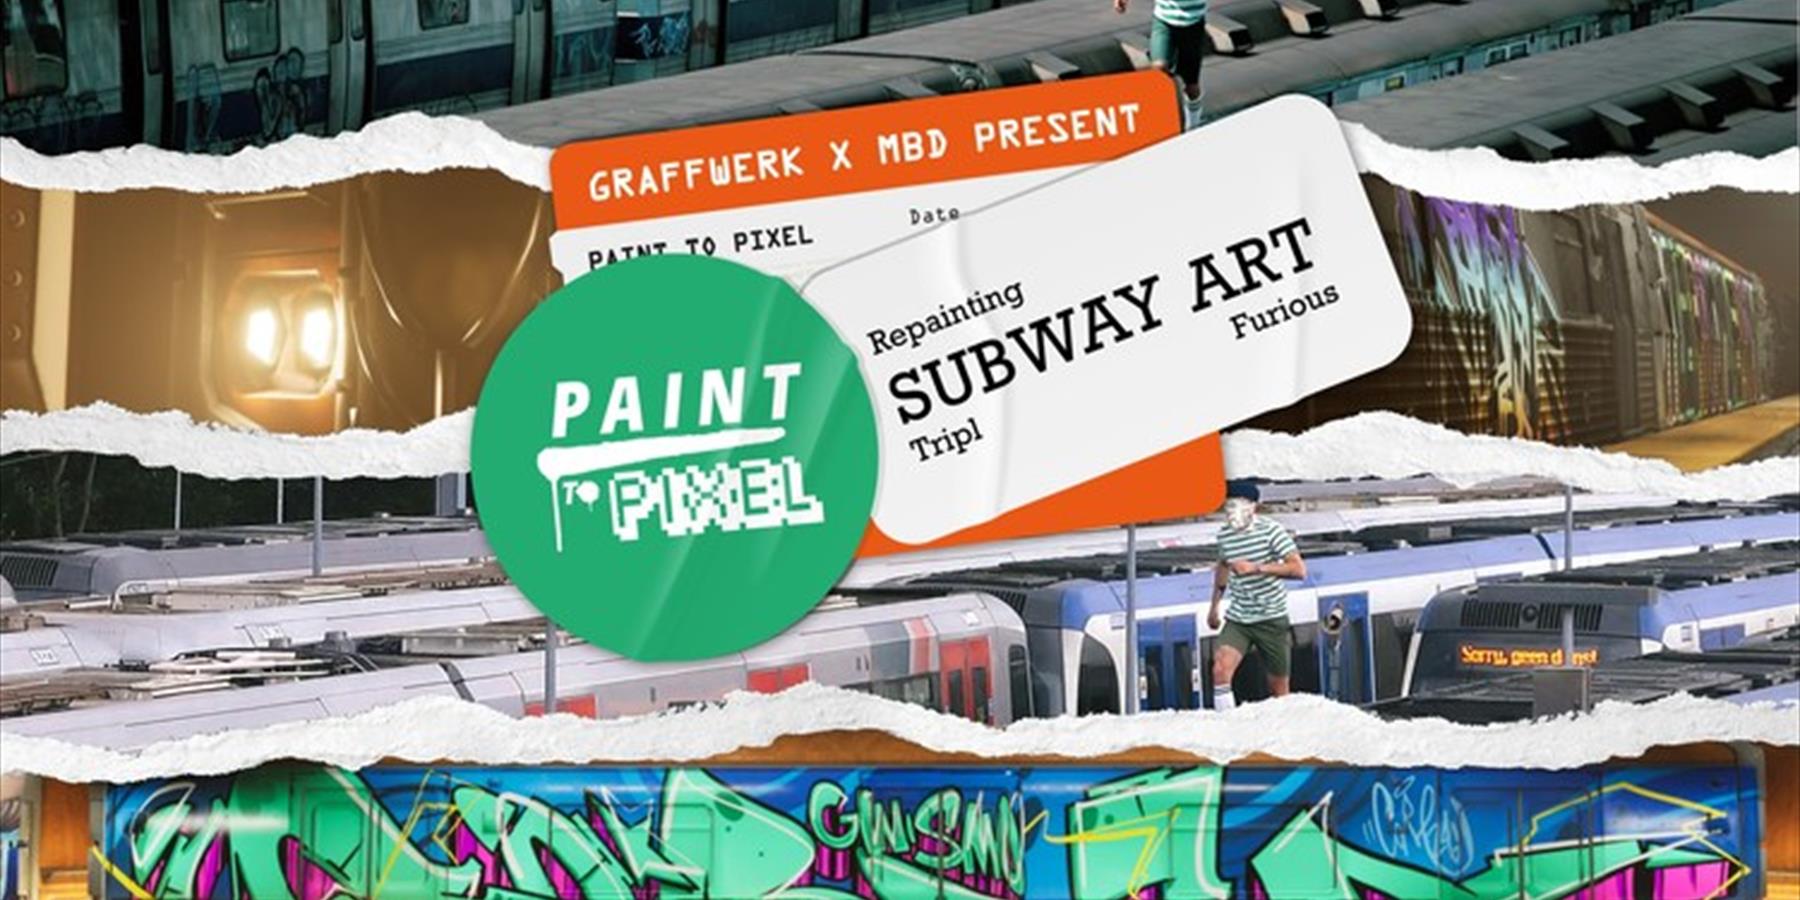 Paint to Pixel X Repainting Subway Art